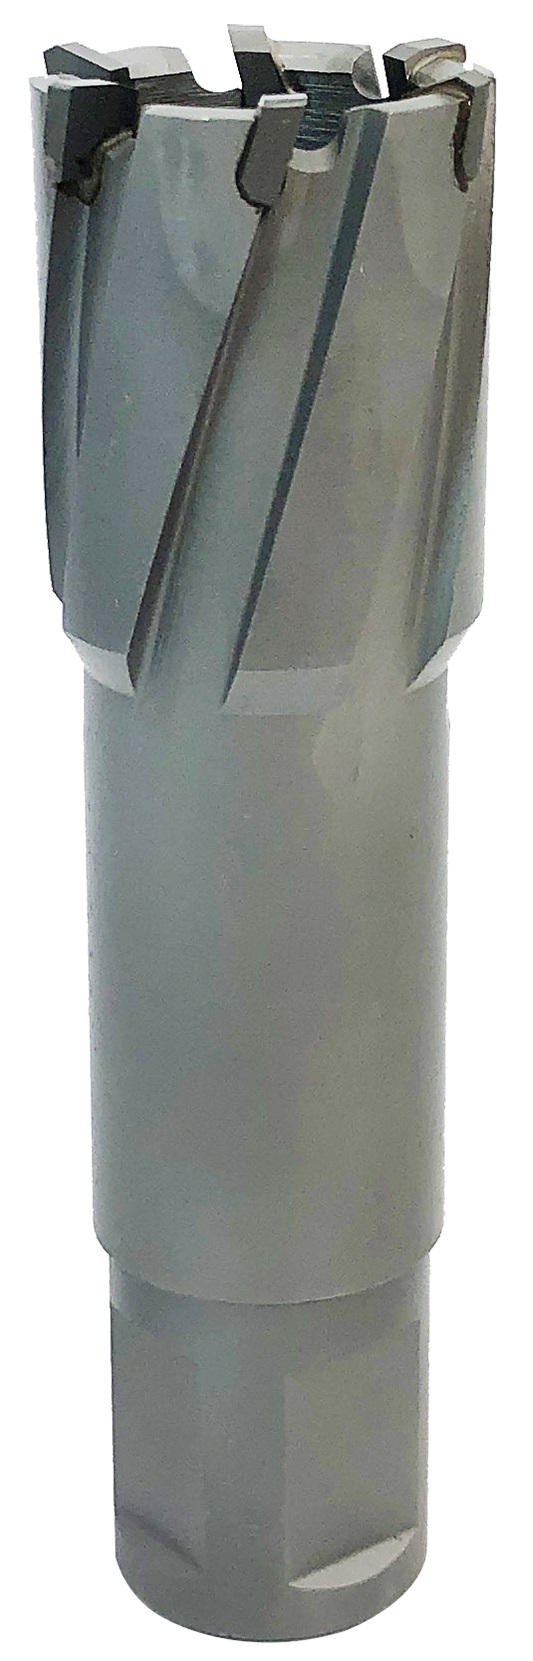 Корончатое сверло (фреза кольцевая) Ø14 L=55/92 мм №304 WELDON19 TCT (твердый сплав) ТМ ПрофОснастка